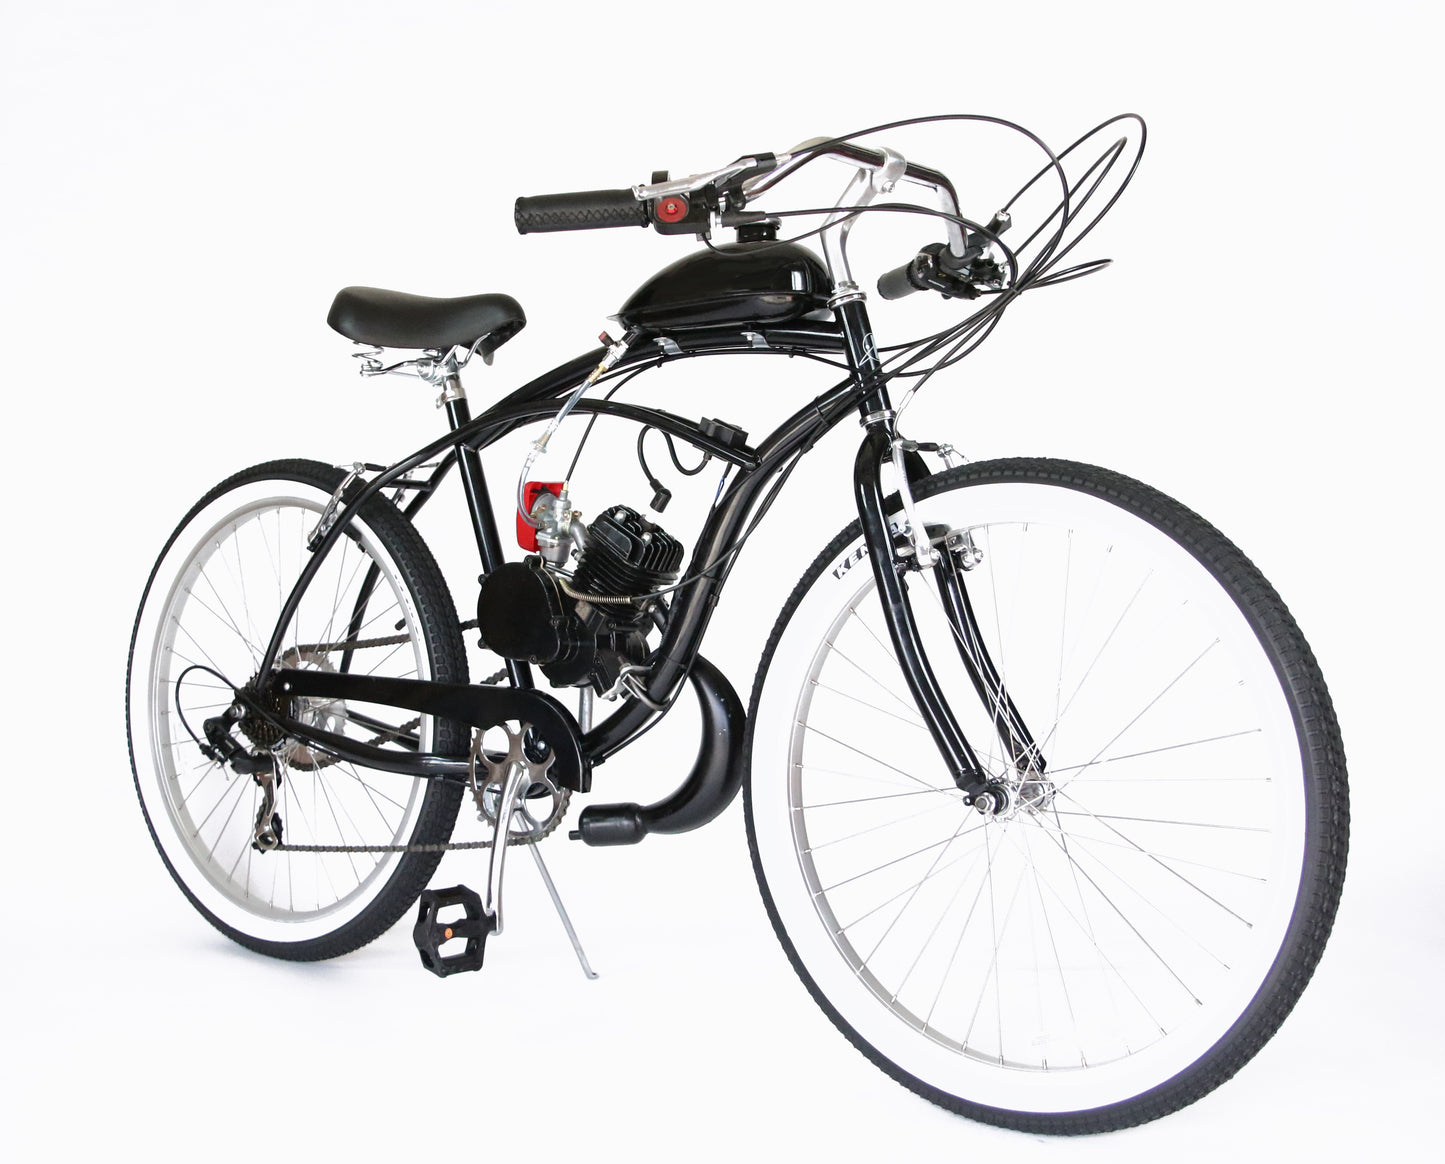 Motorized Bicycle Kit Installed